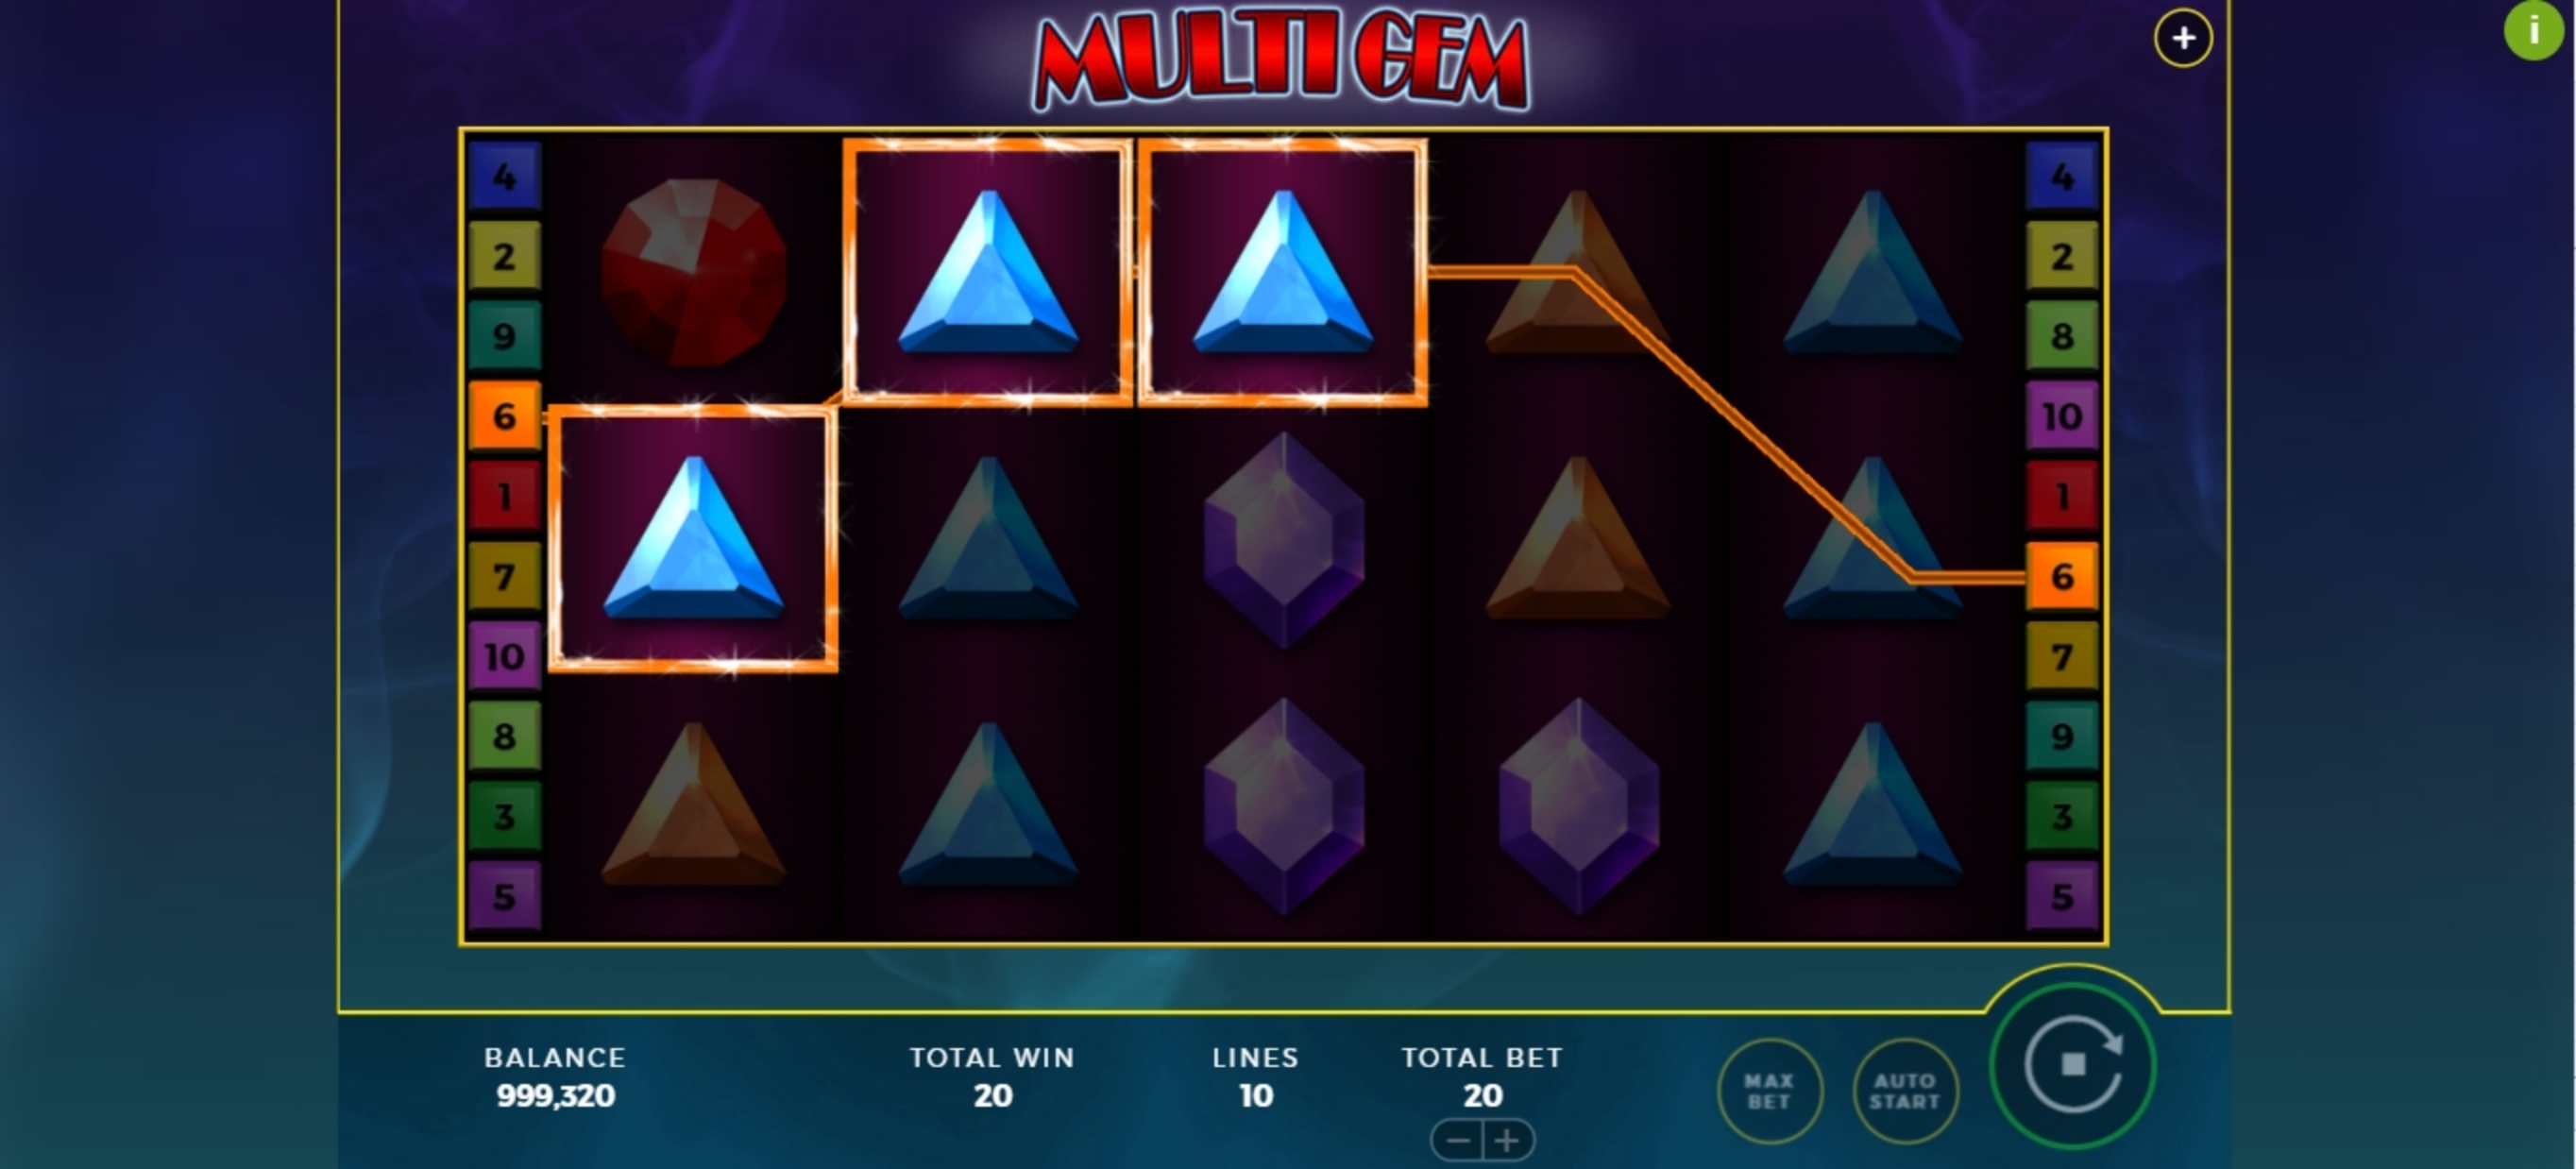 Win Money in Multi Gem Free Slot Game by Bally Wulff